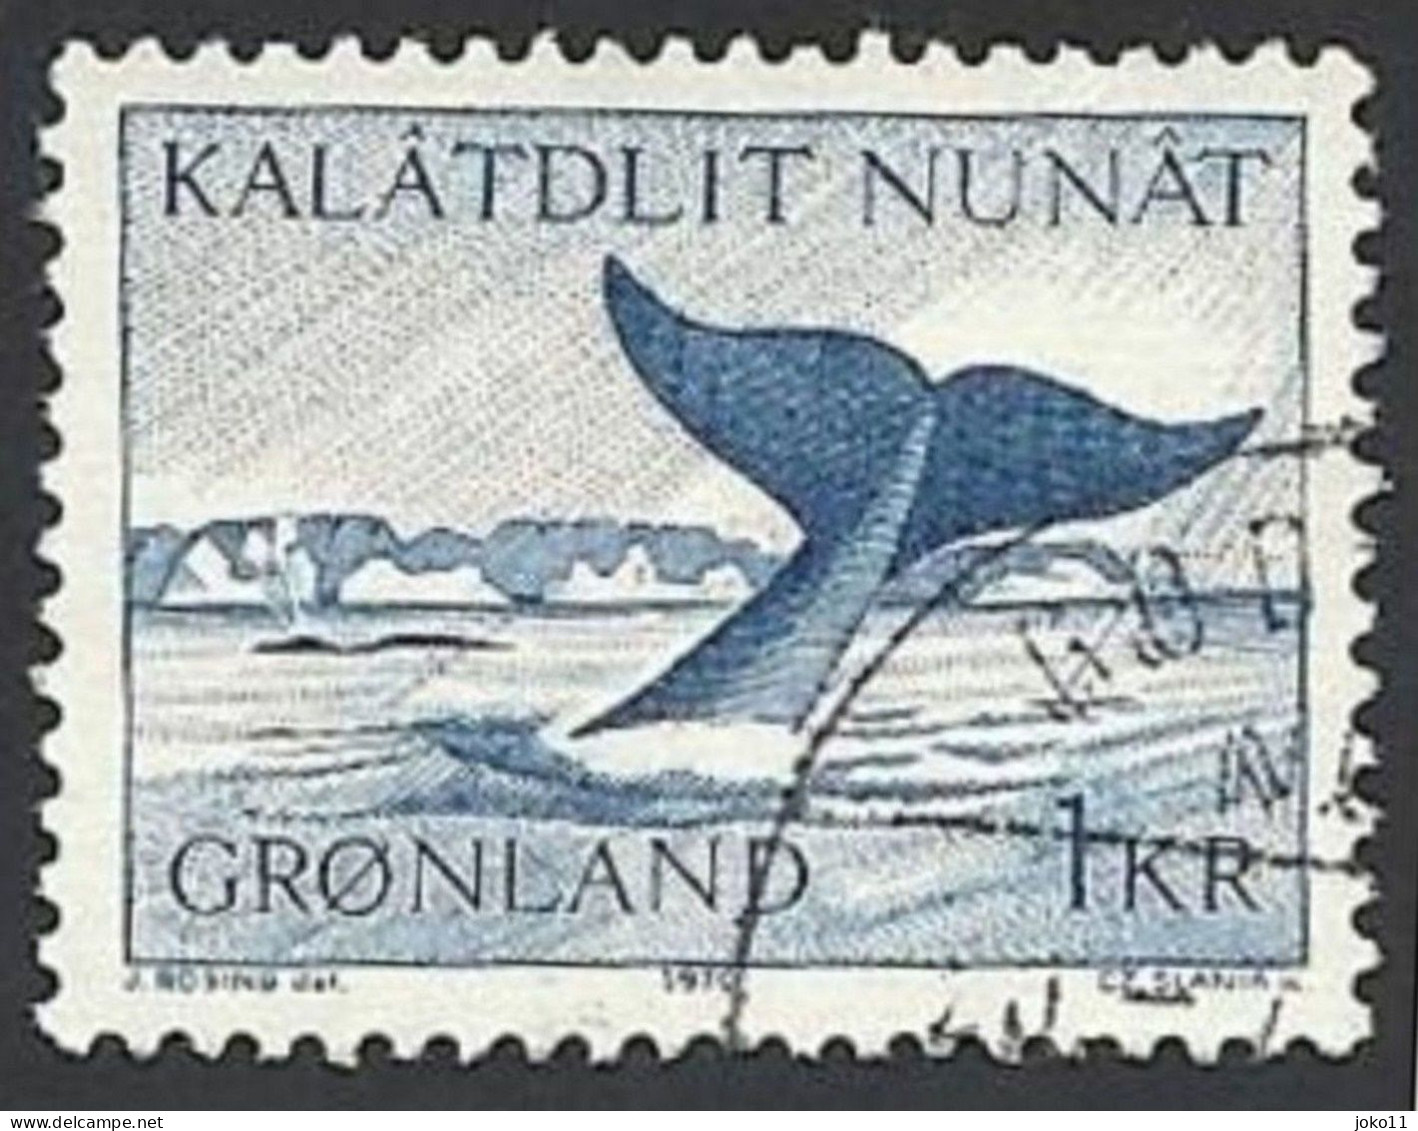 Grönland, 1970, Mi.-Nr. 75, Gestempelt - Gebraucht